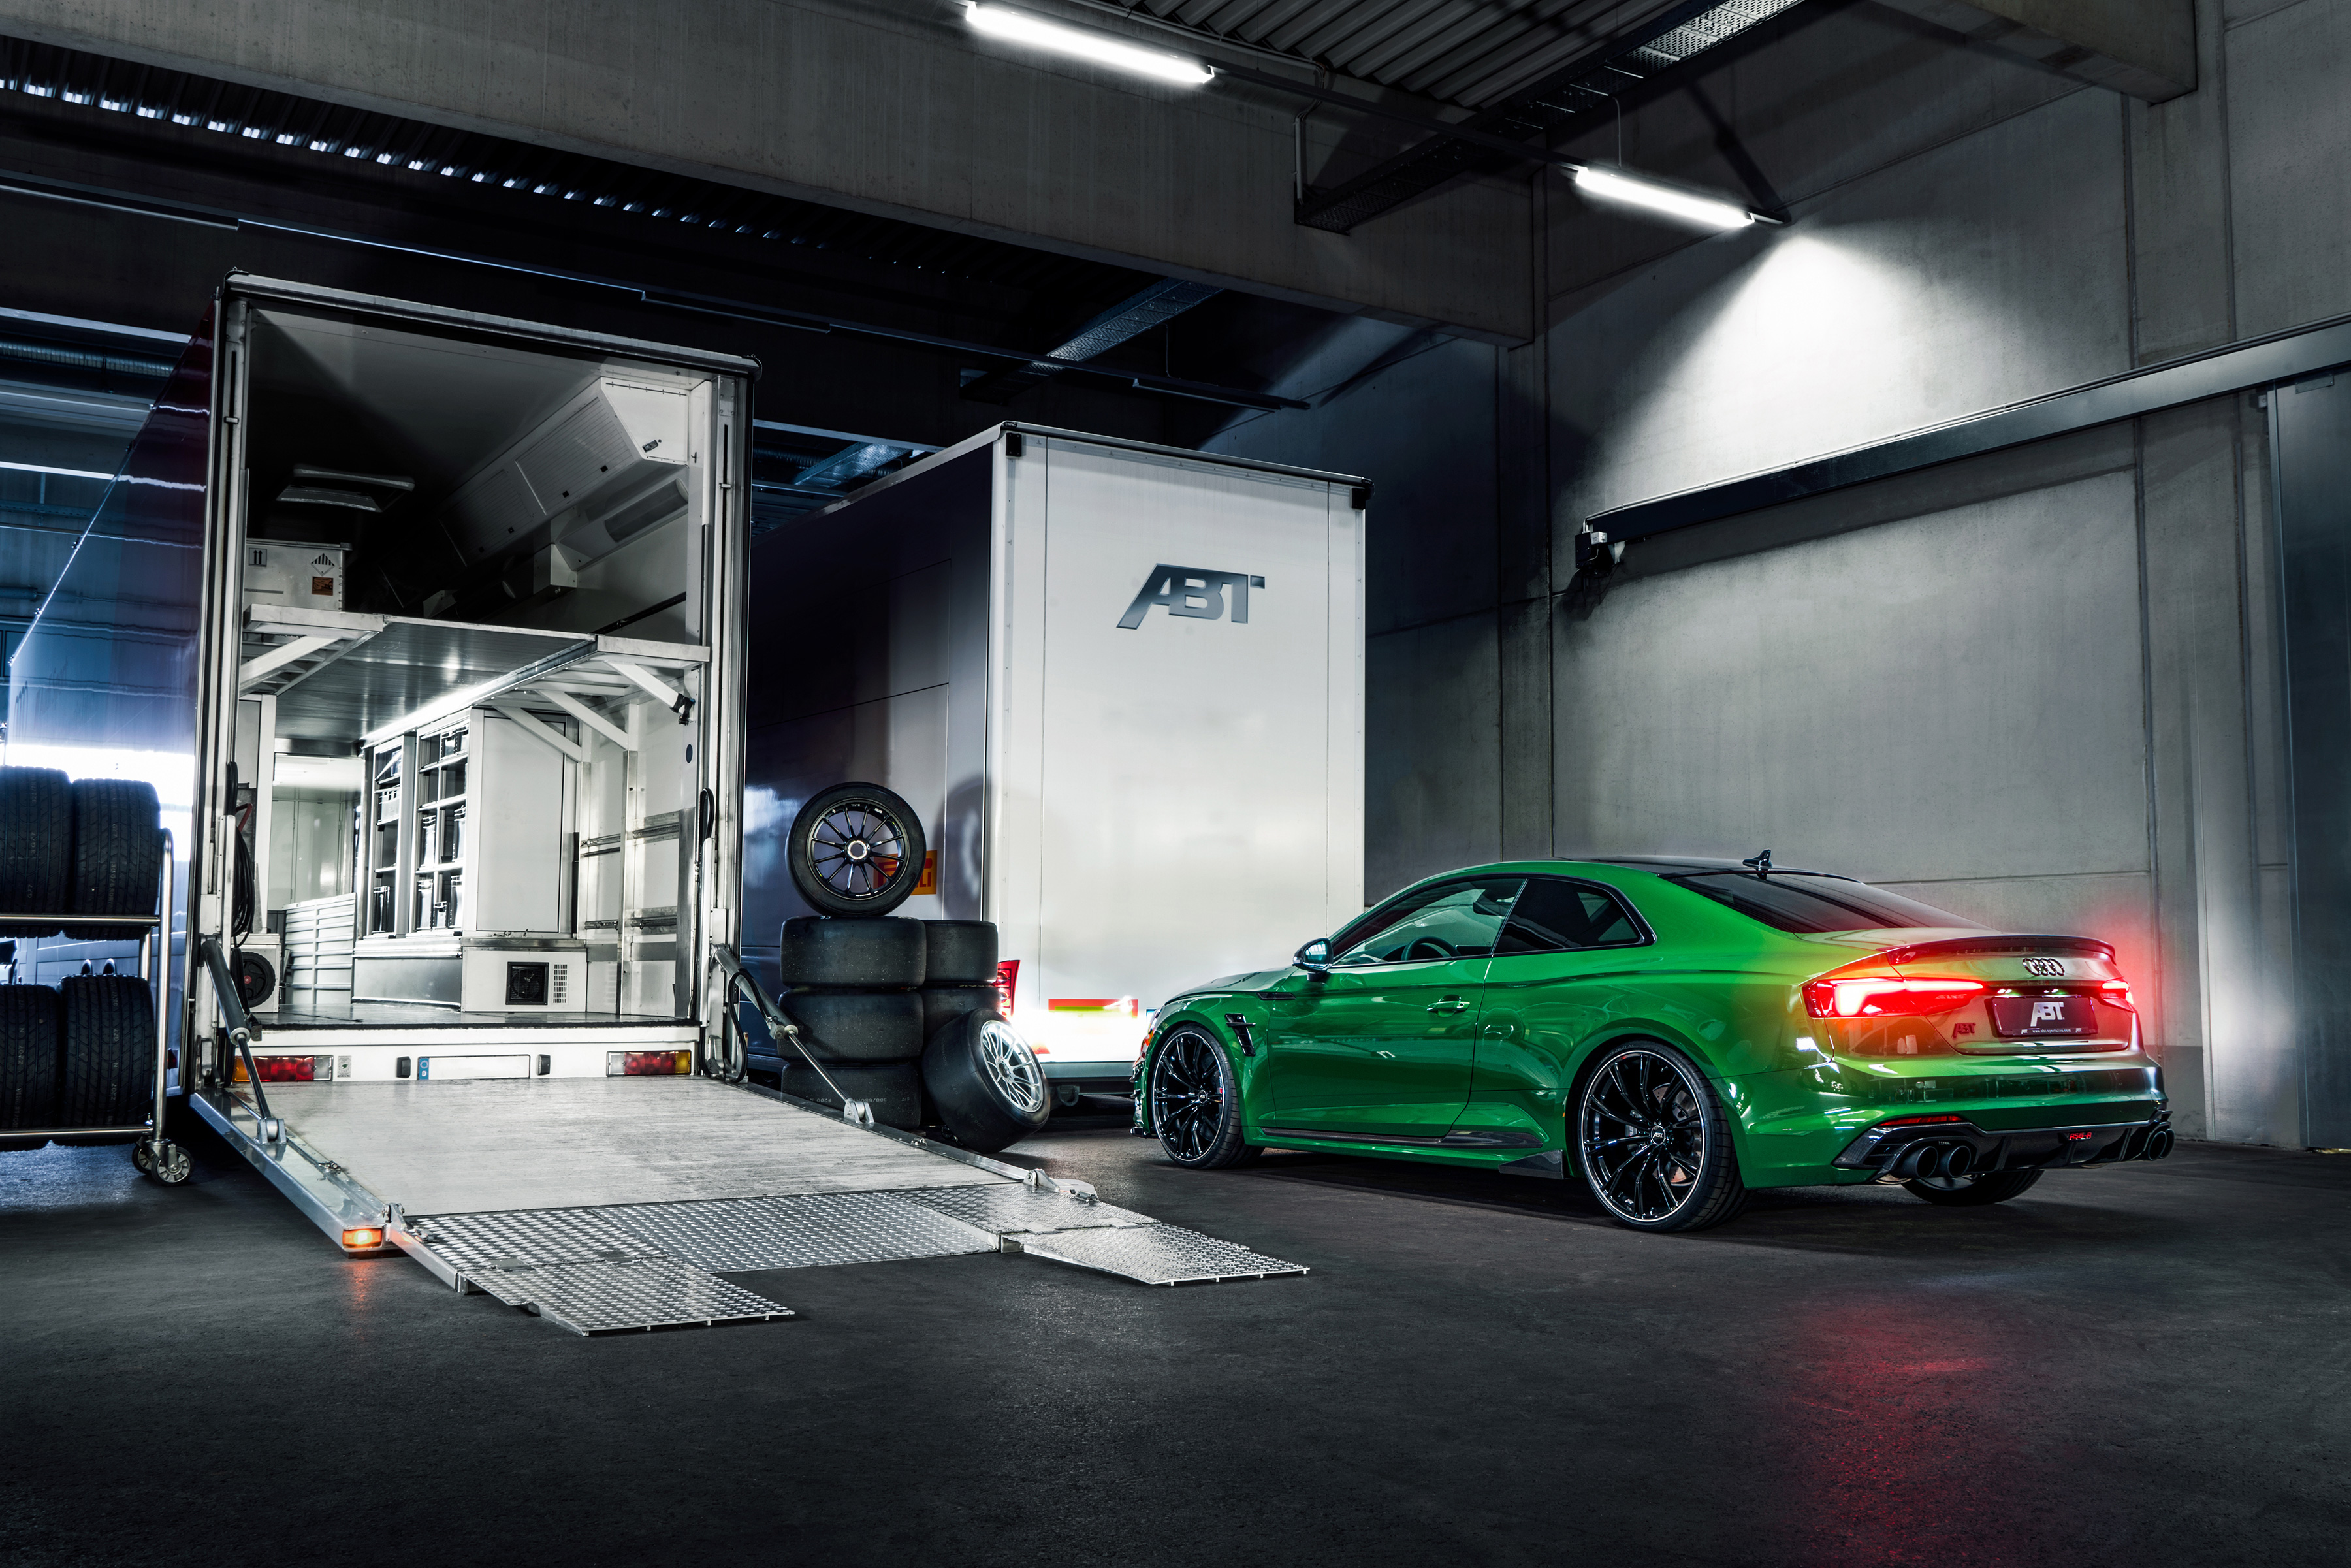 Зеленая Audi Abt Rs5 R на шиномонтаже